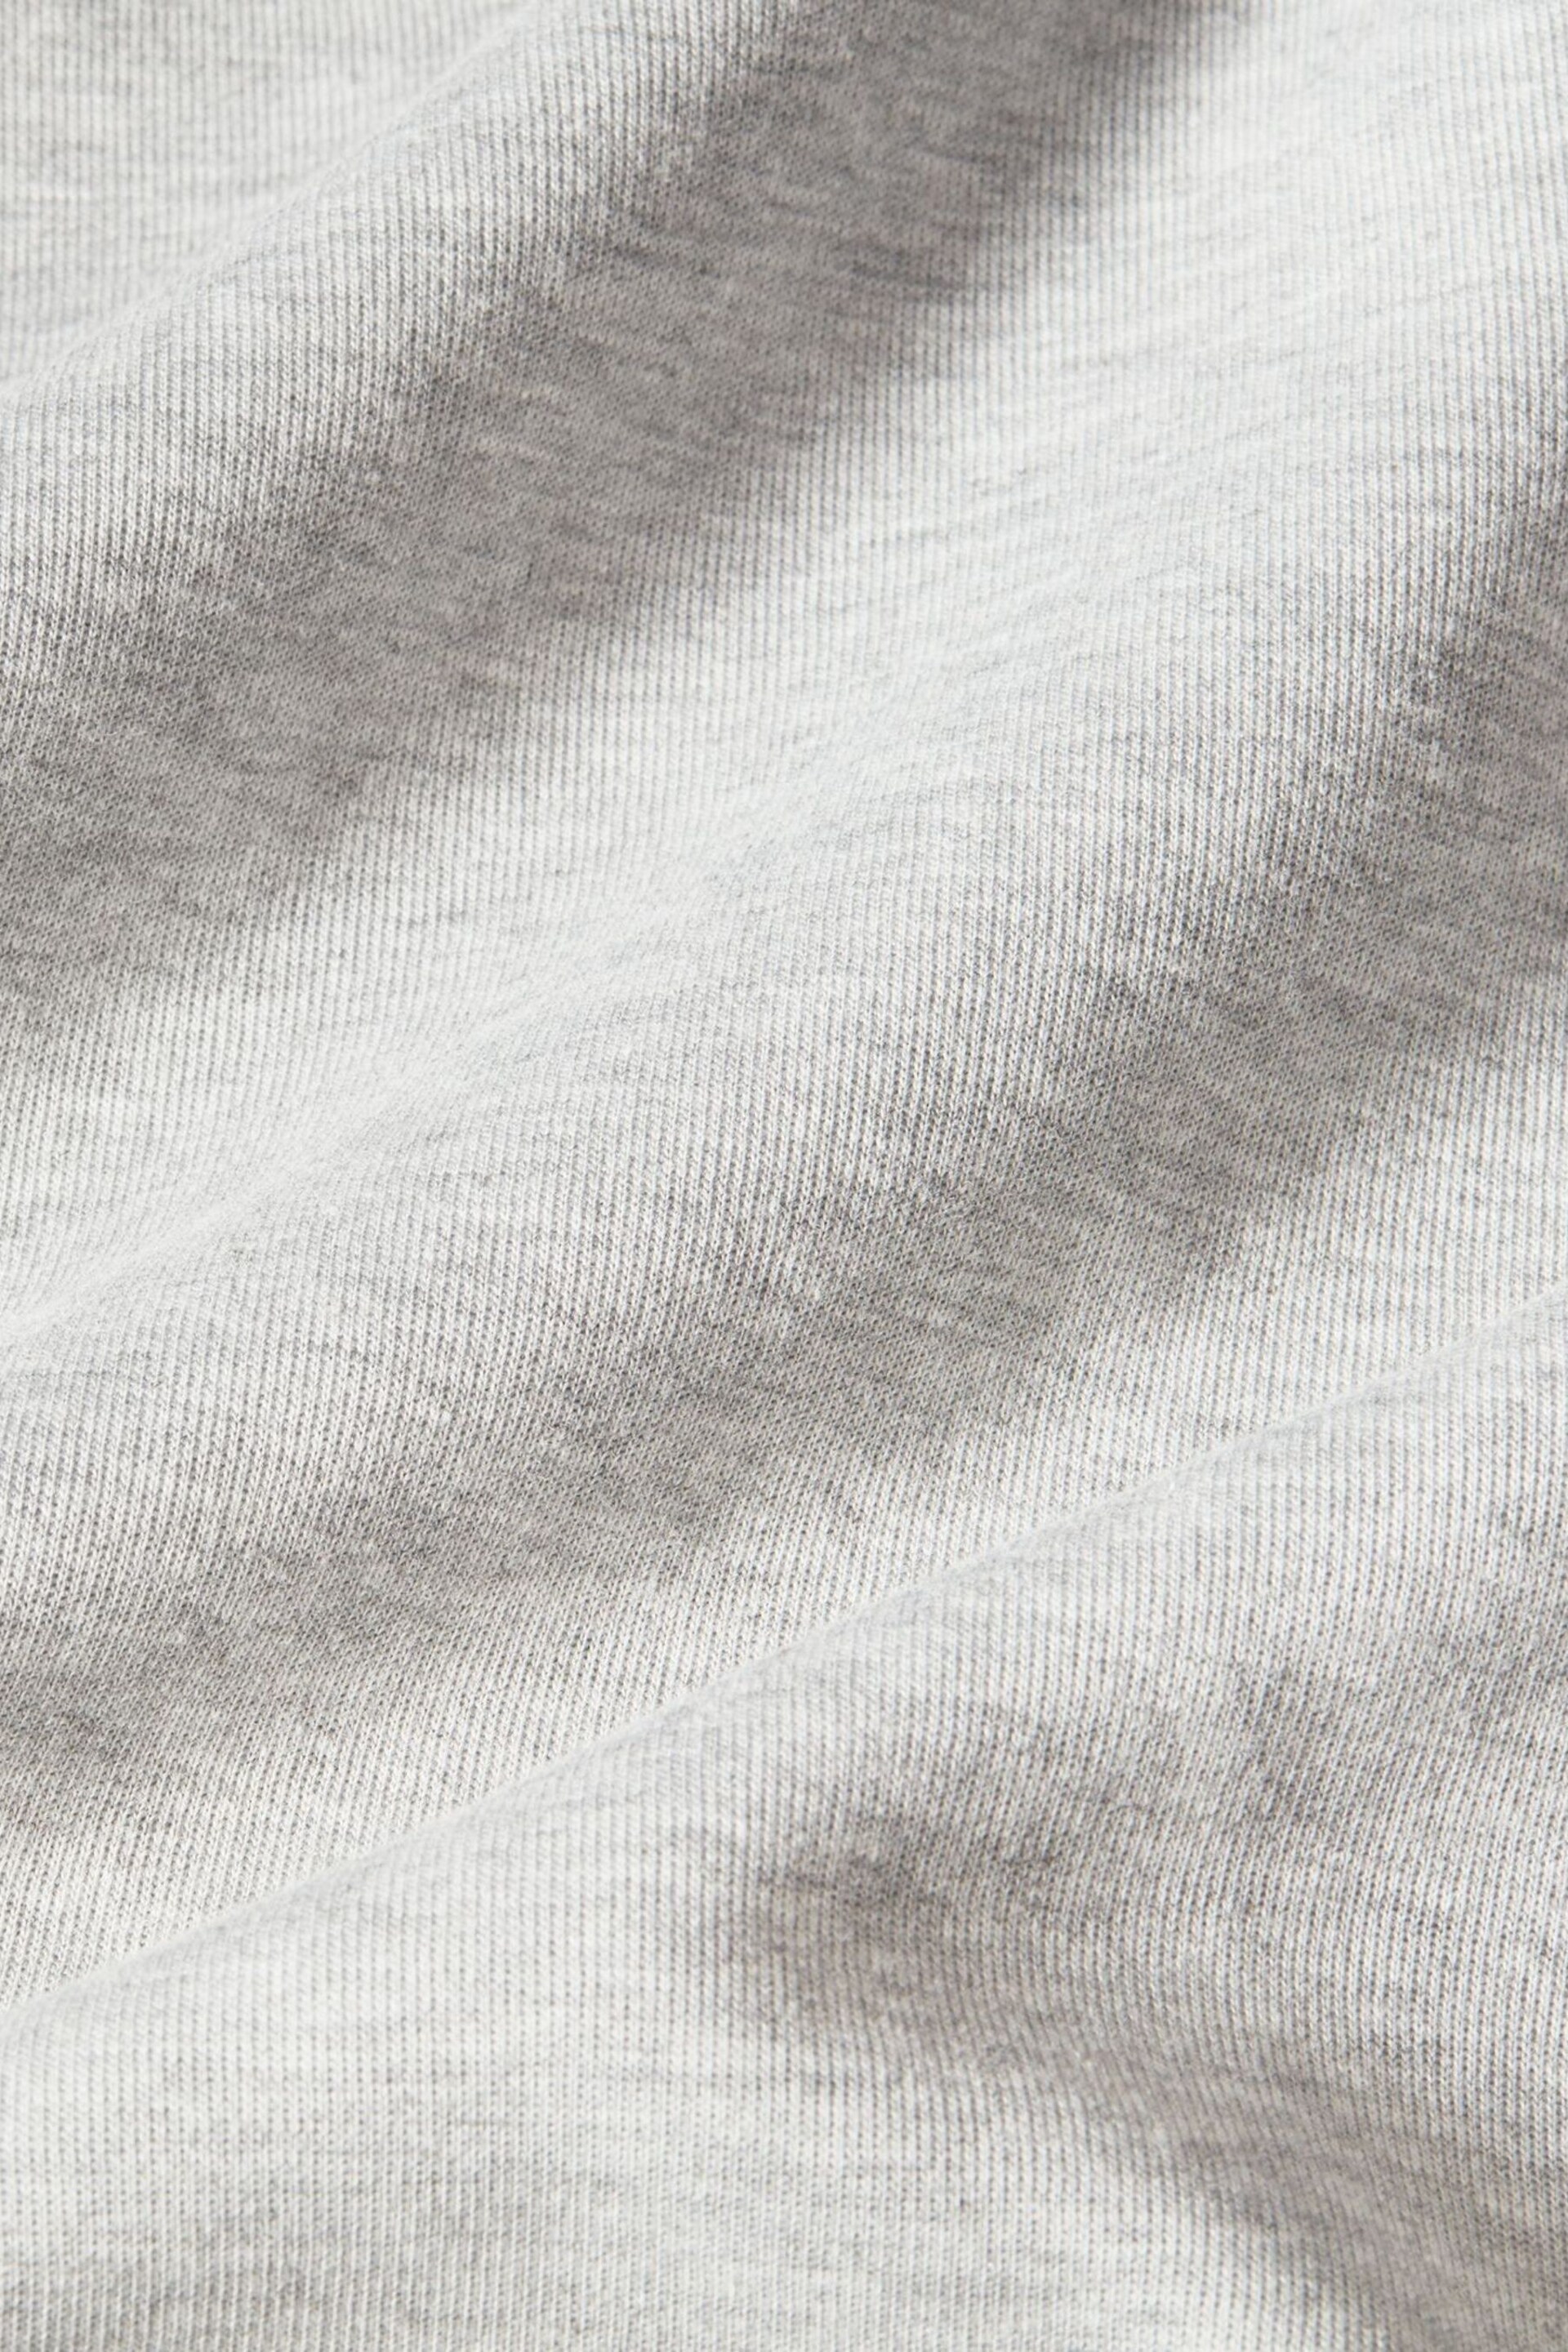 Nike Grey Tech Fleece Pullover Hoodie - Image 16 of 18